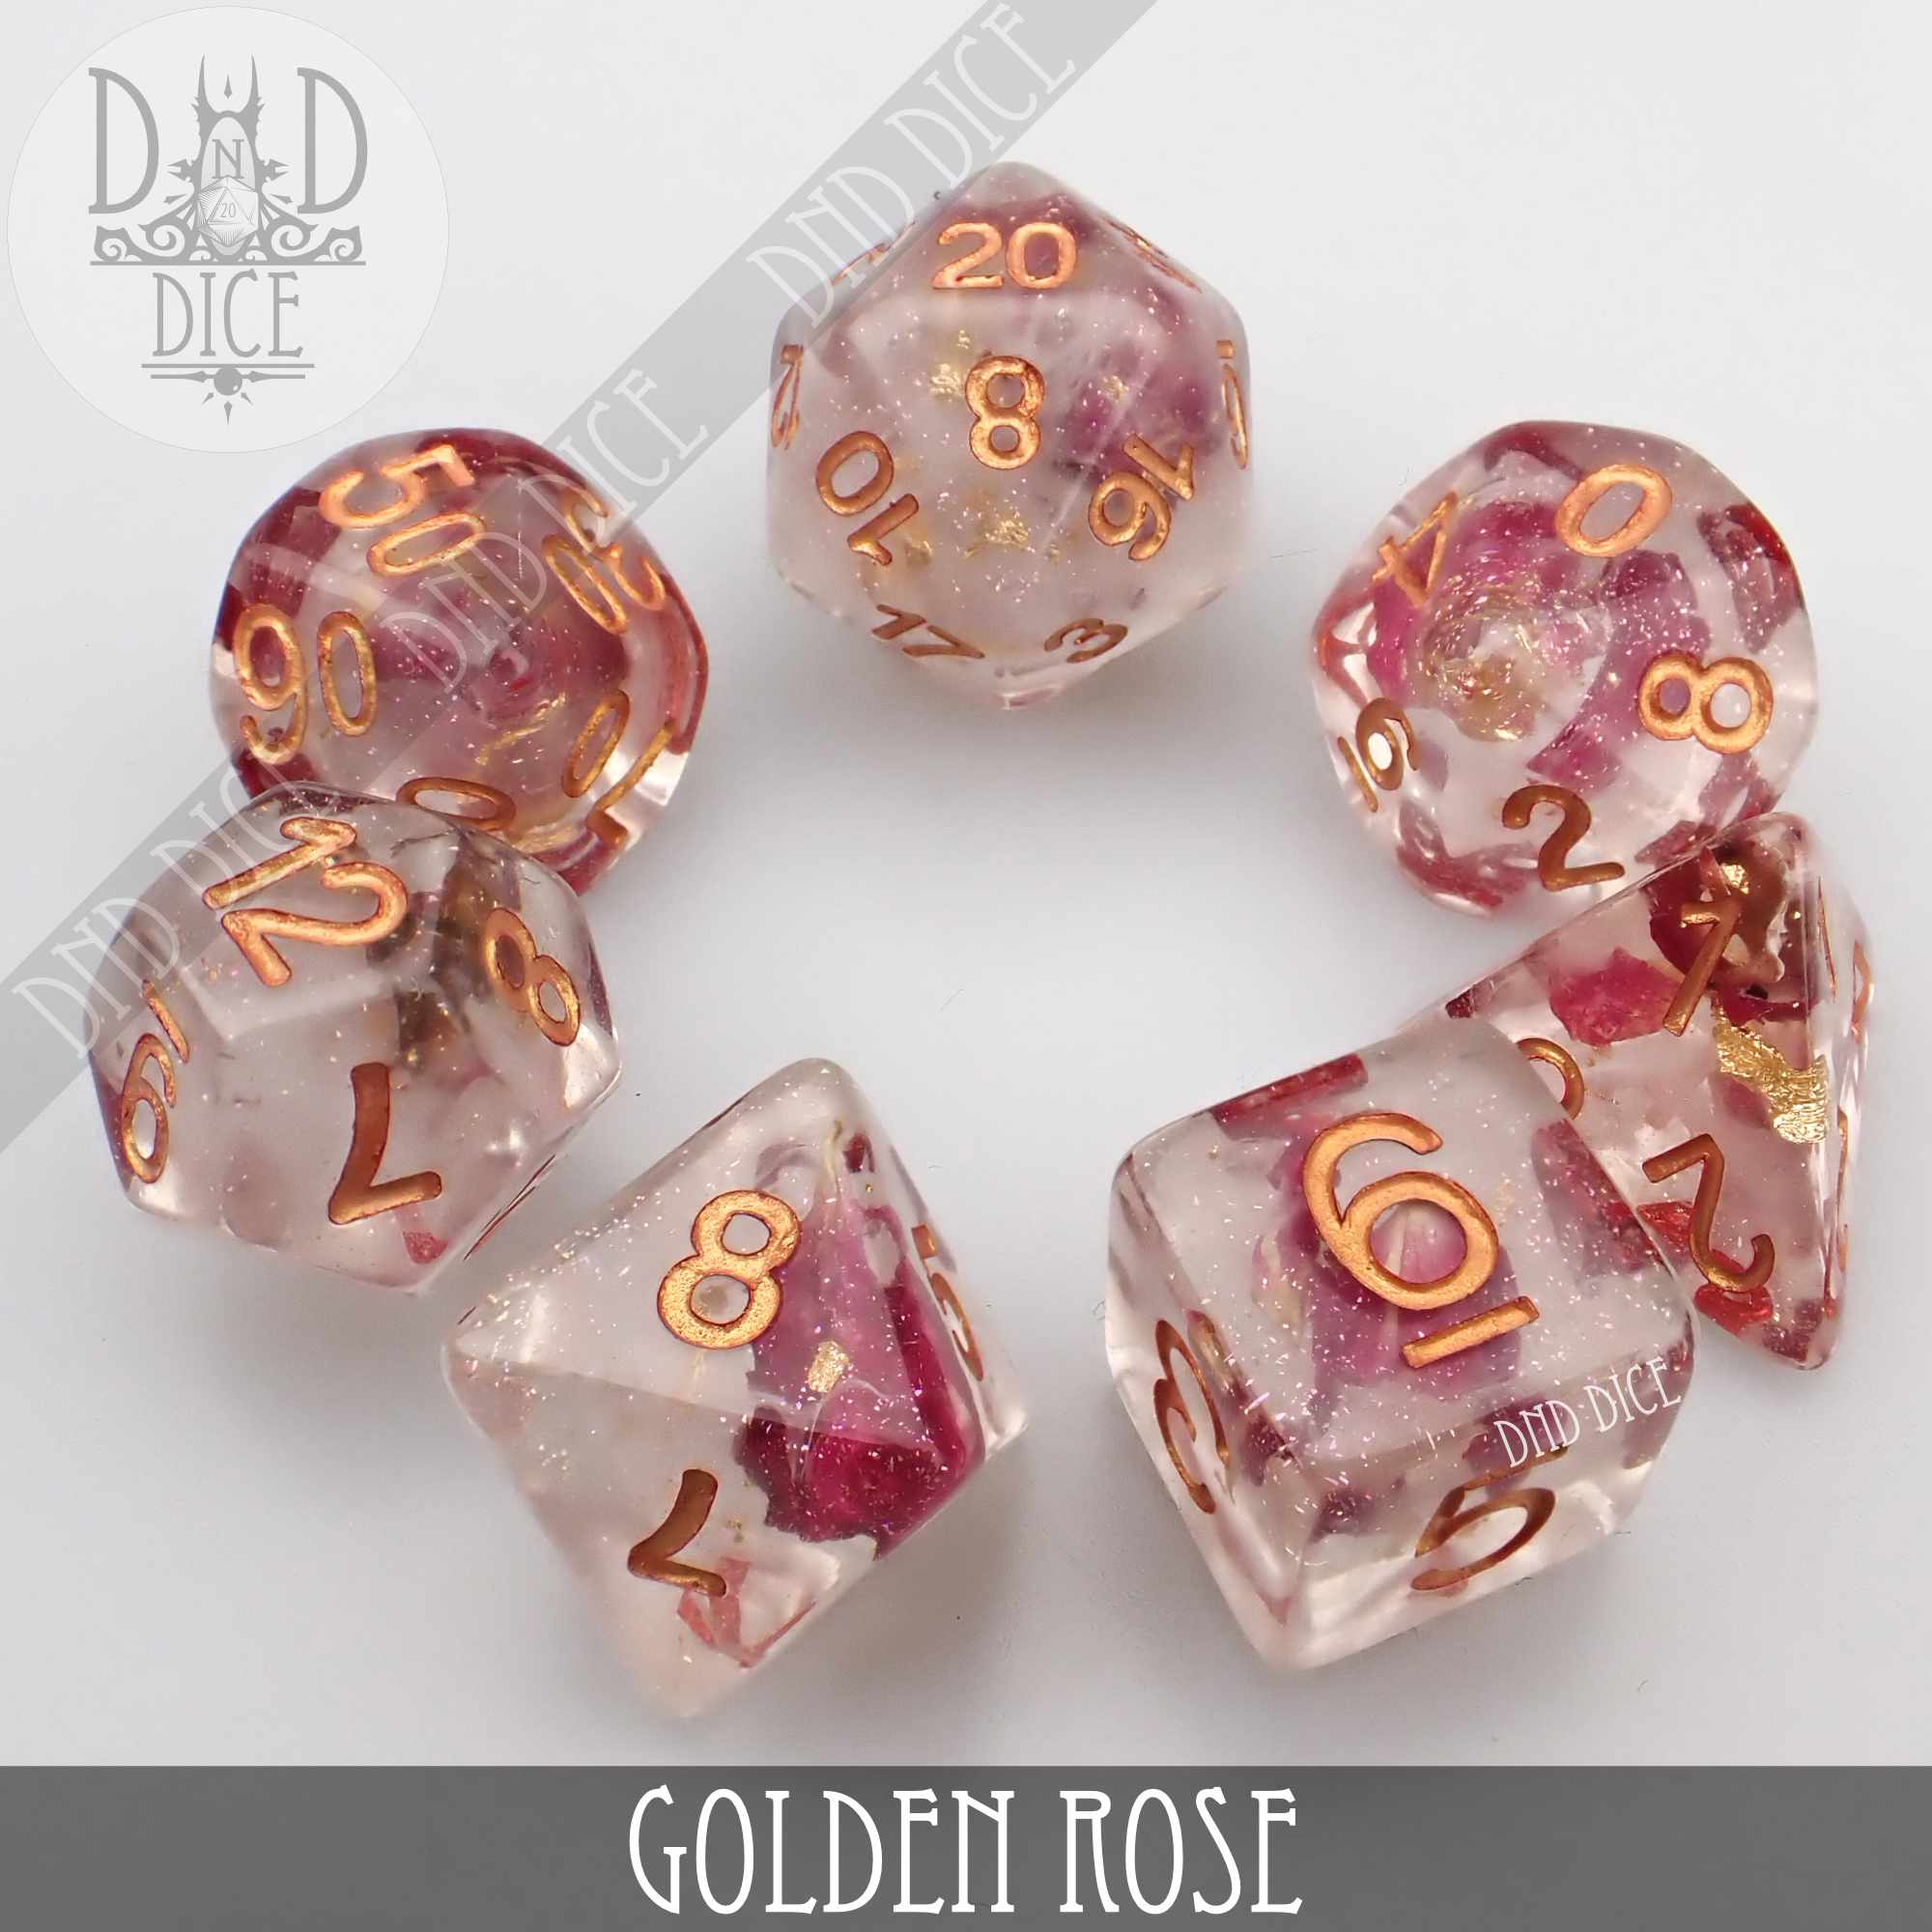 Golden Rose Dice Set